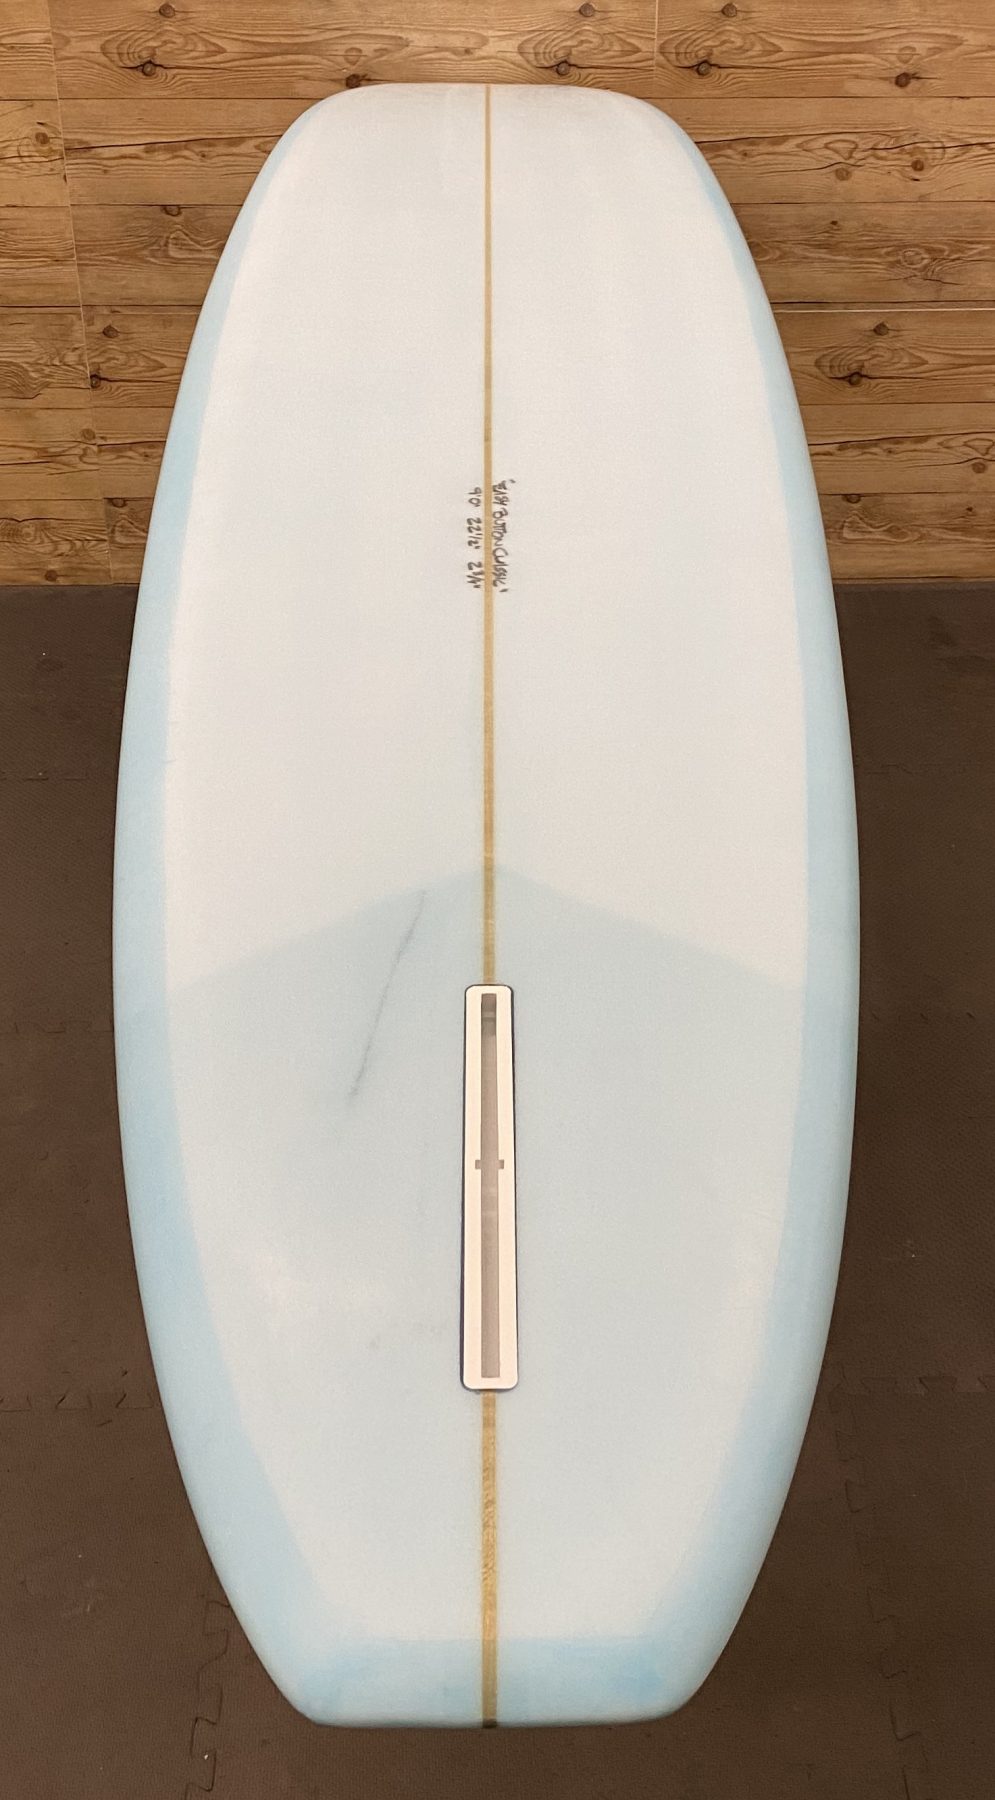 Classic Longboard 9'6"